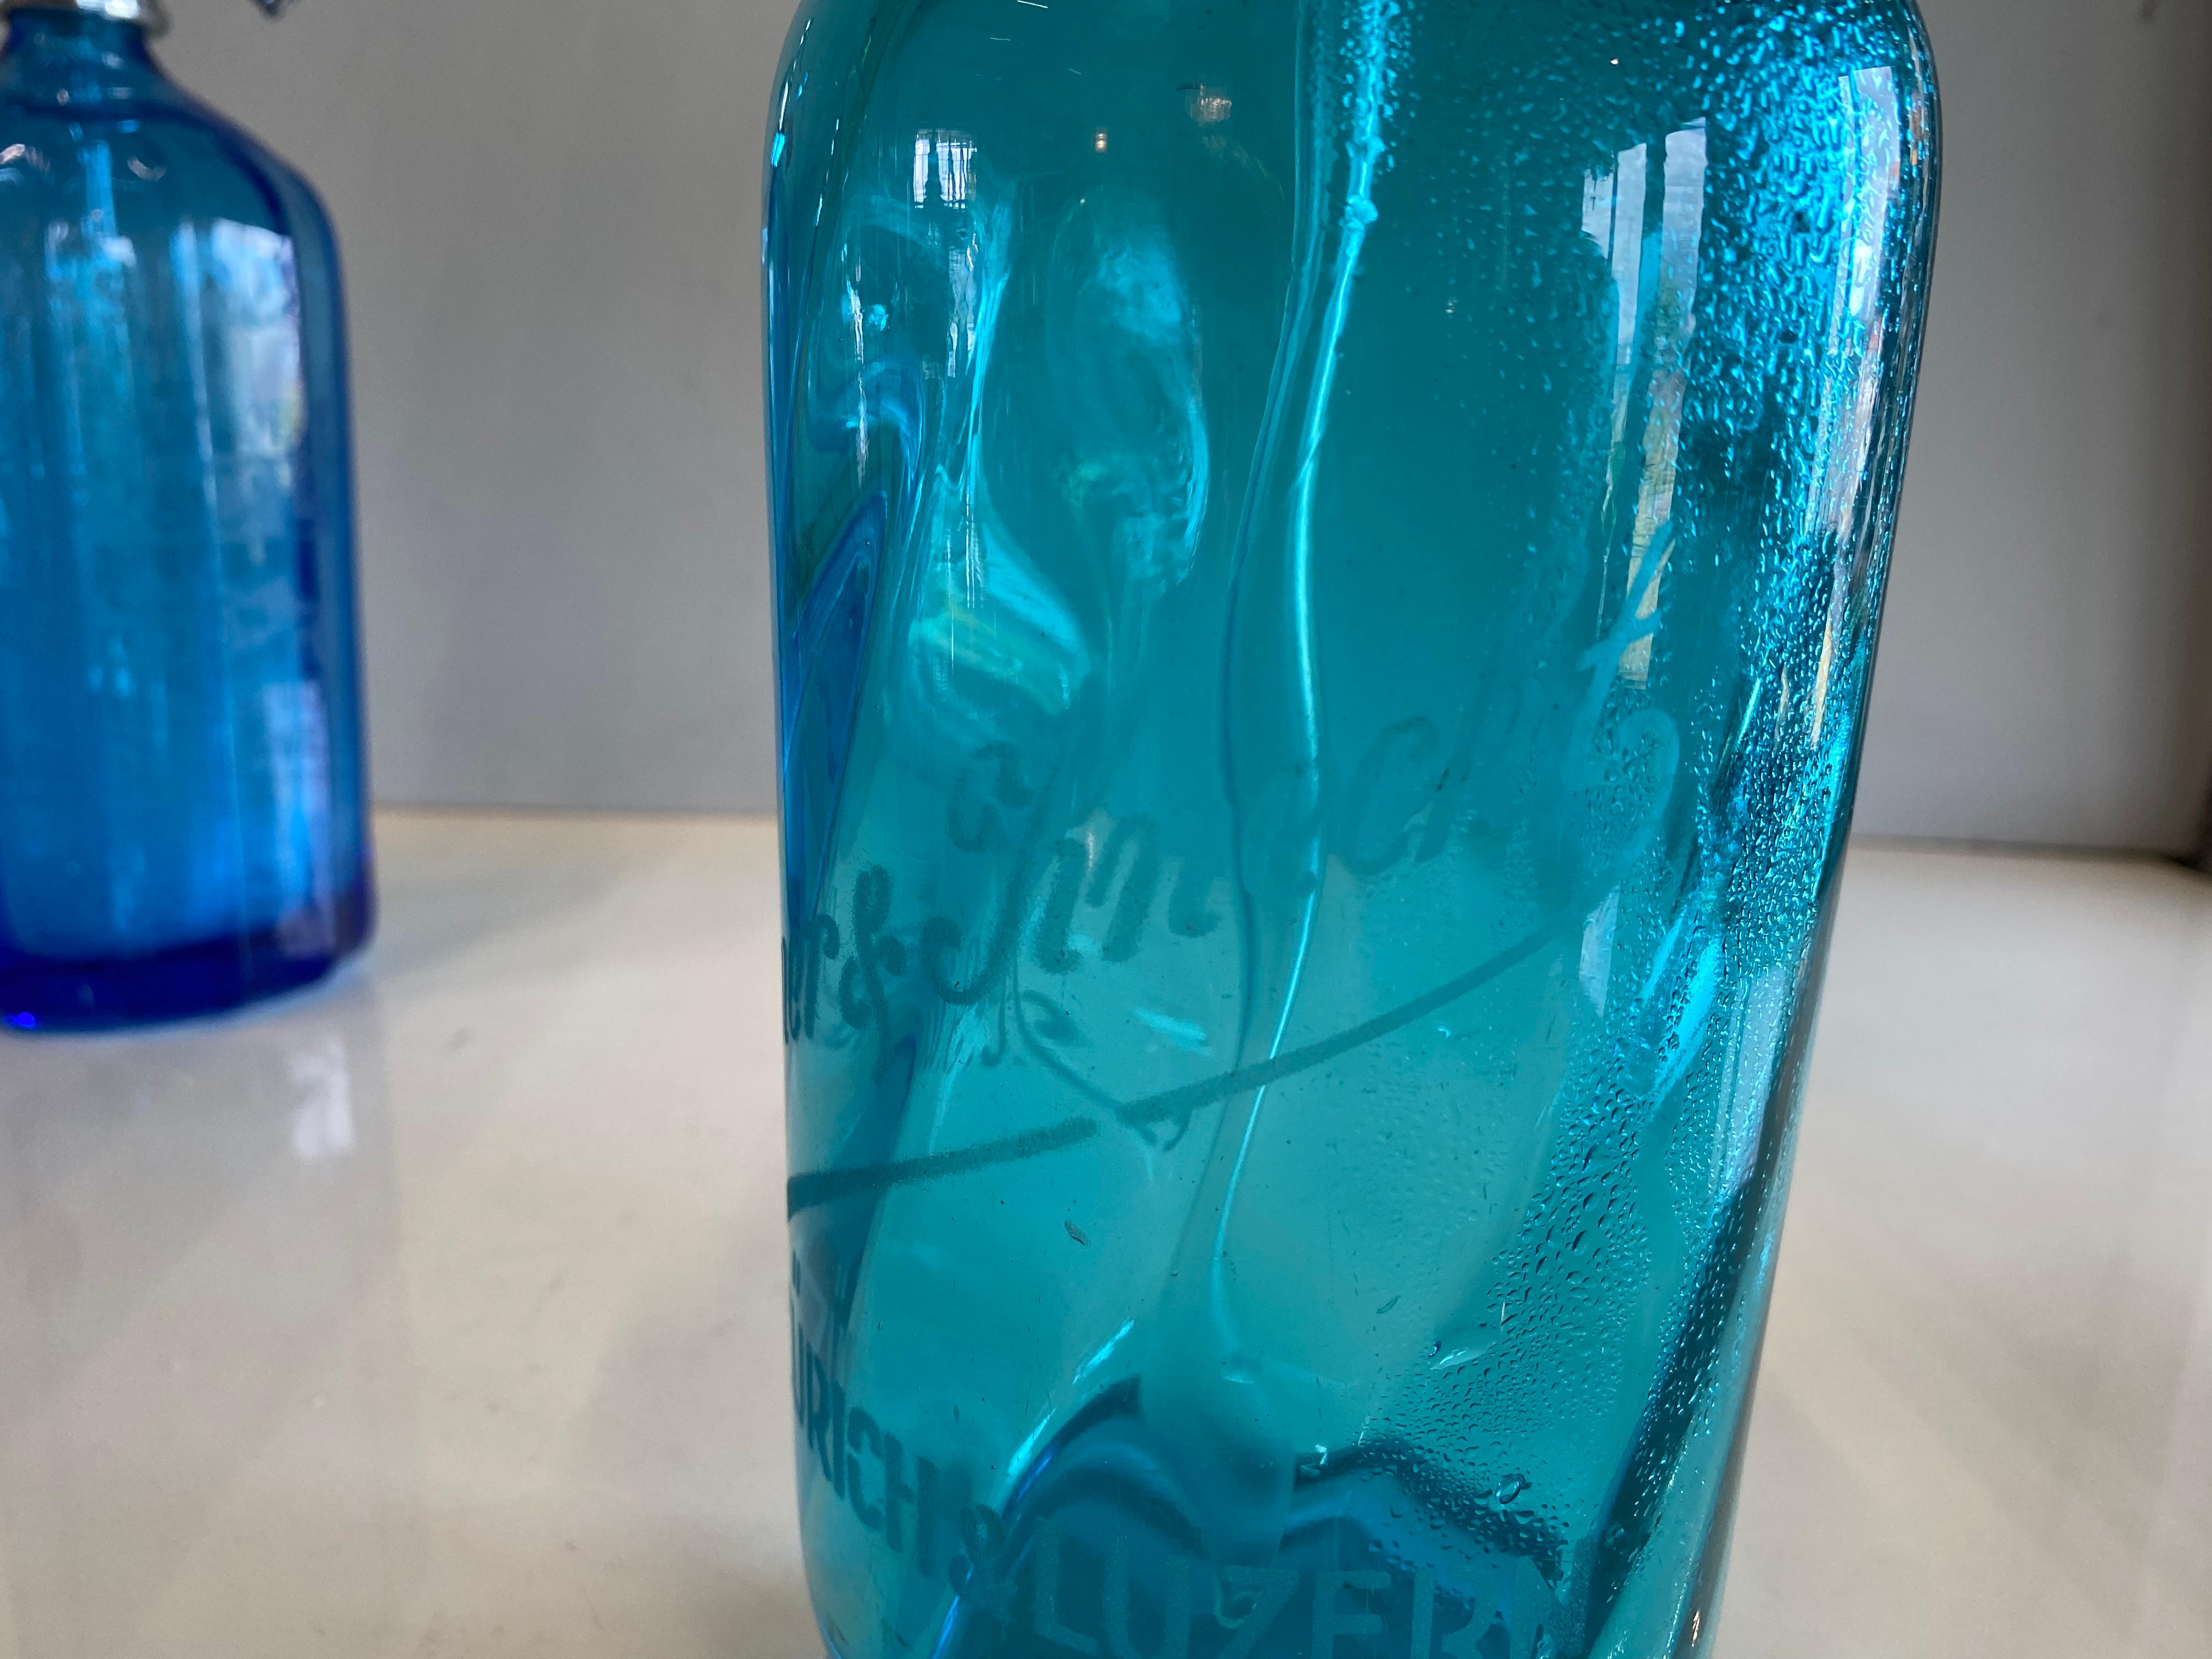 Seltzer-Soda-Seidenflaschen-Set im Jugendstil, blaues Glas, türkisfarbenes Glas im Angebot 11